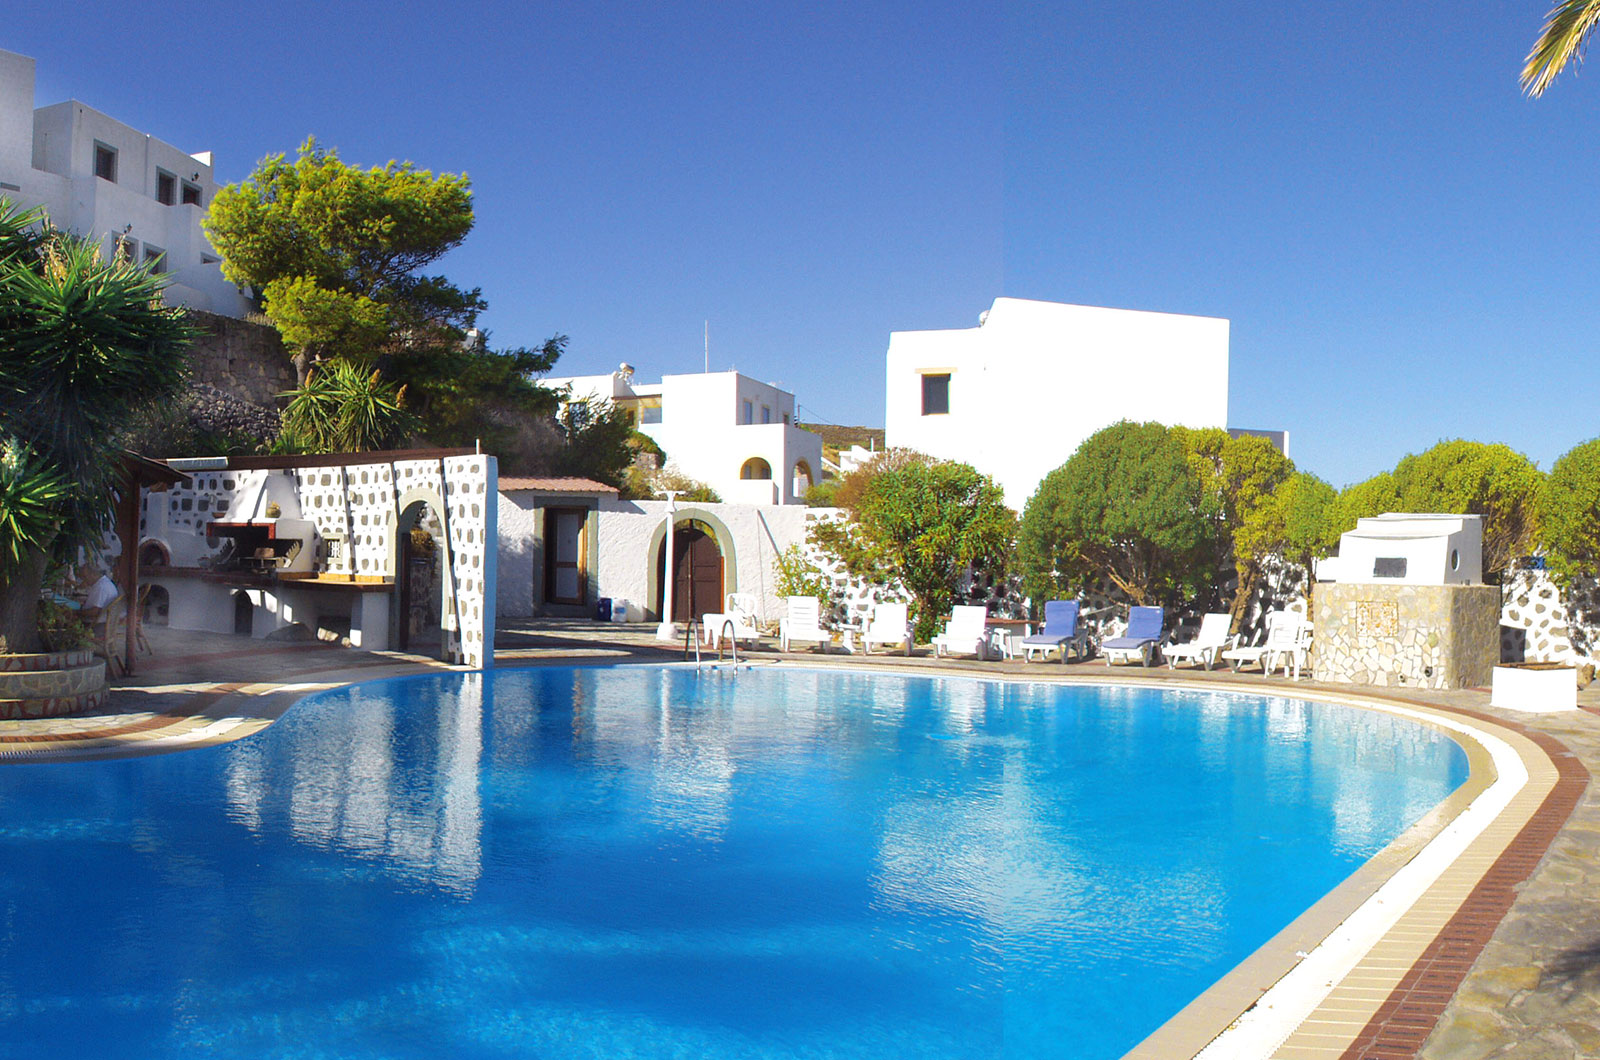 Anamar Patmos Hotel - Πάτμος ✦ -56% ✦ 2 Ημέρες (1 Διανυκτέρευση)